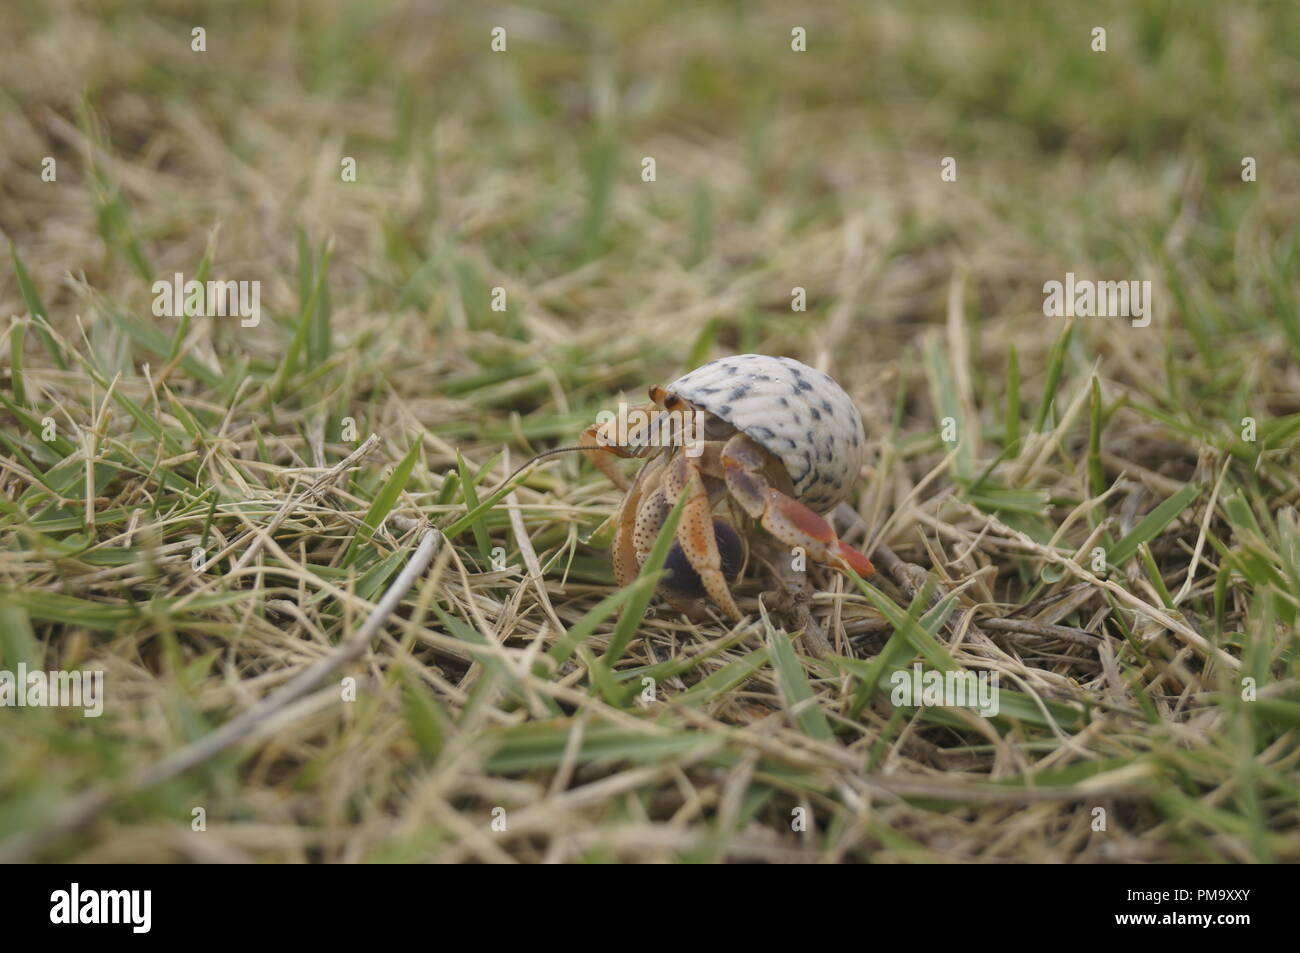 Coenobita clypeatus Caribbean Land hermit crab Stock Photo